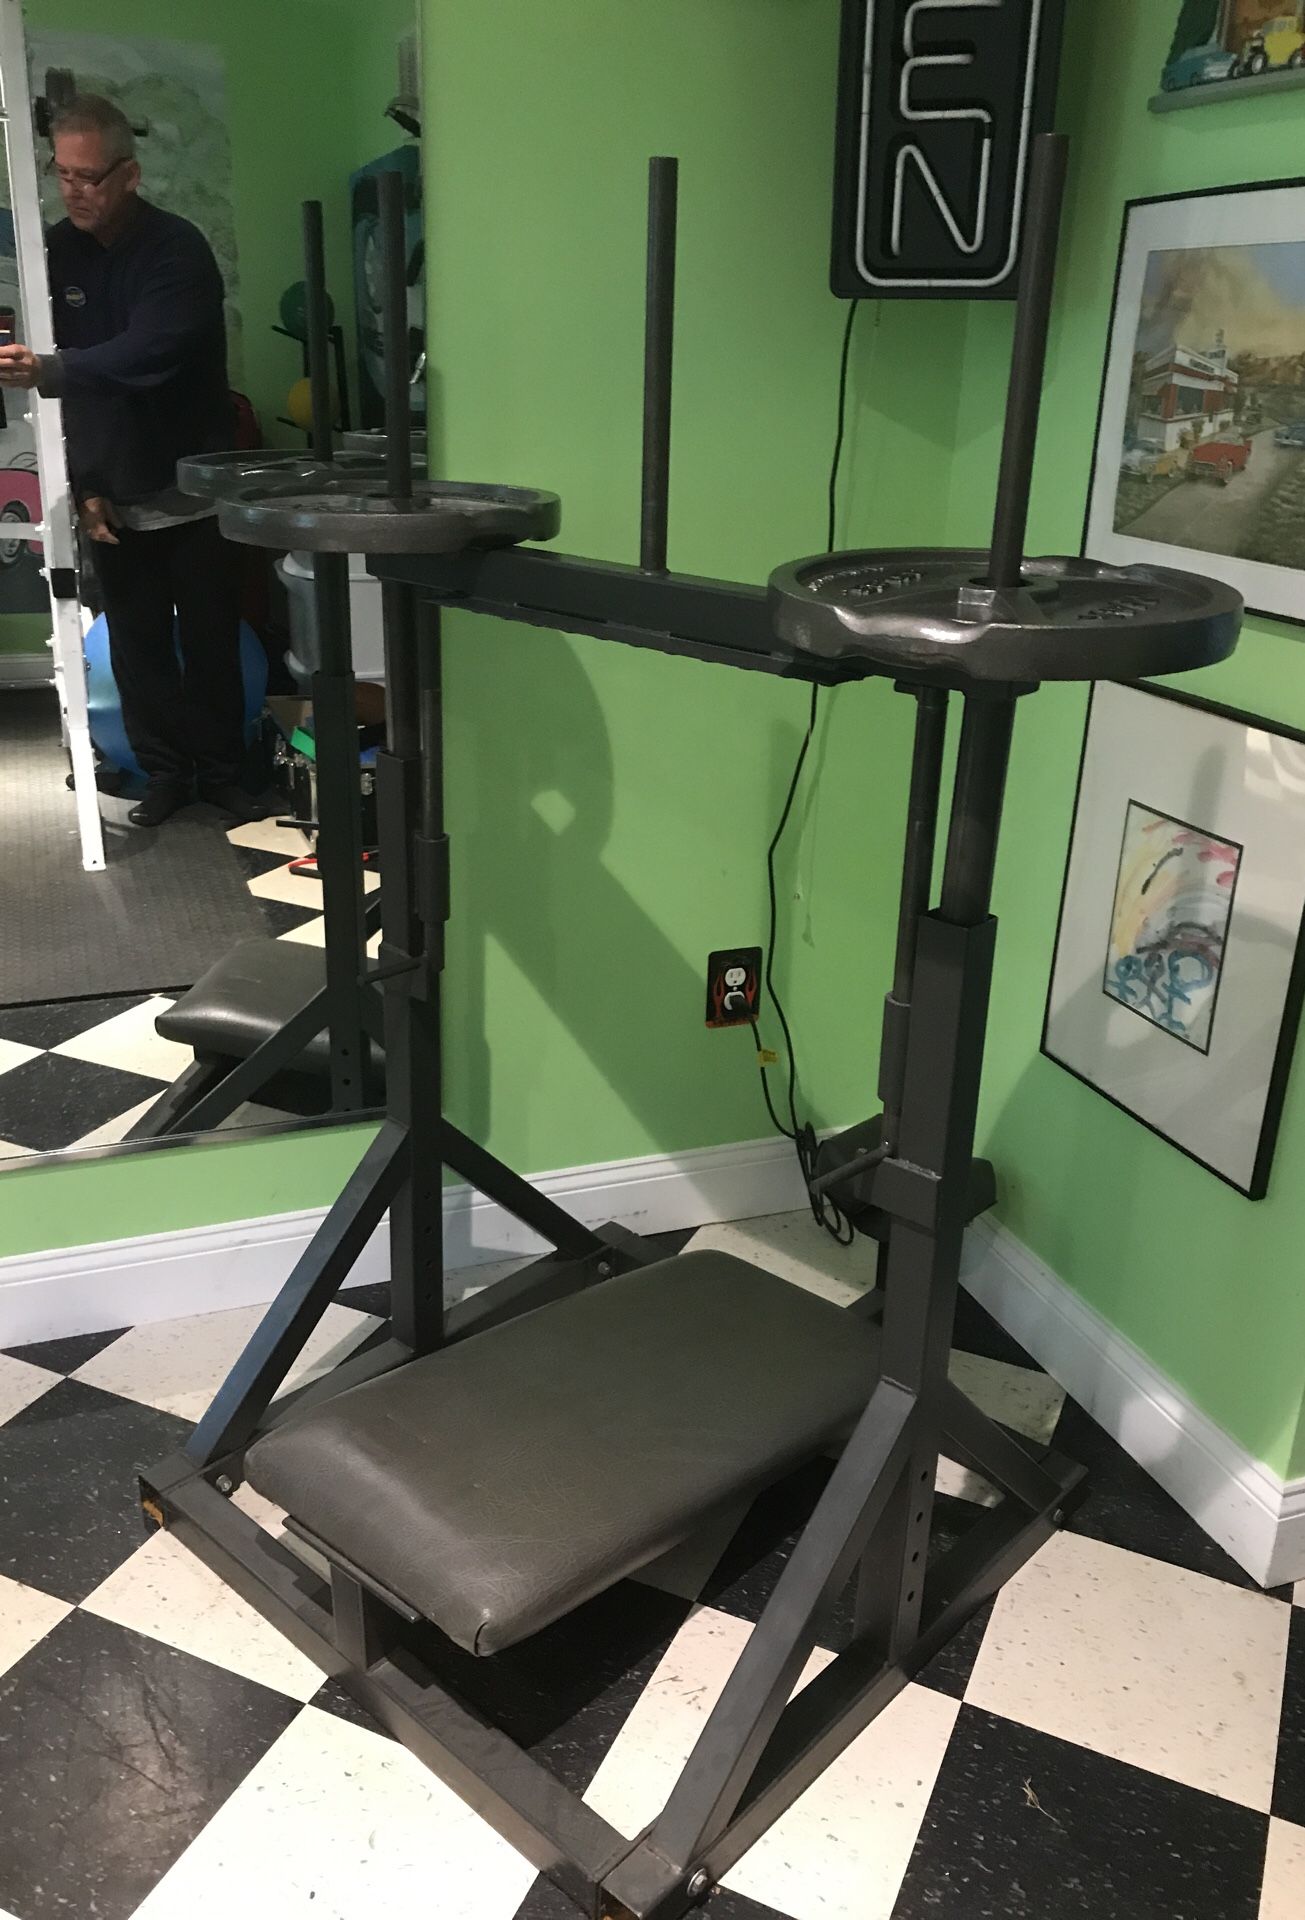 Gym Equipment inverted leg press